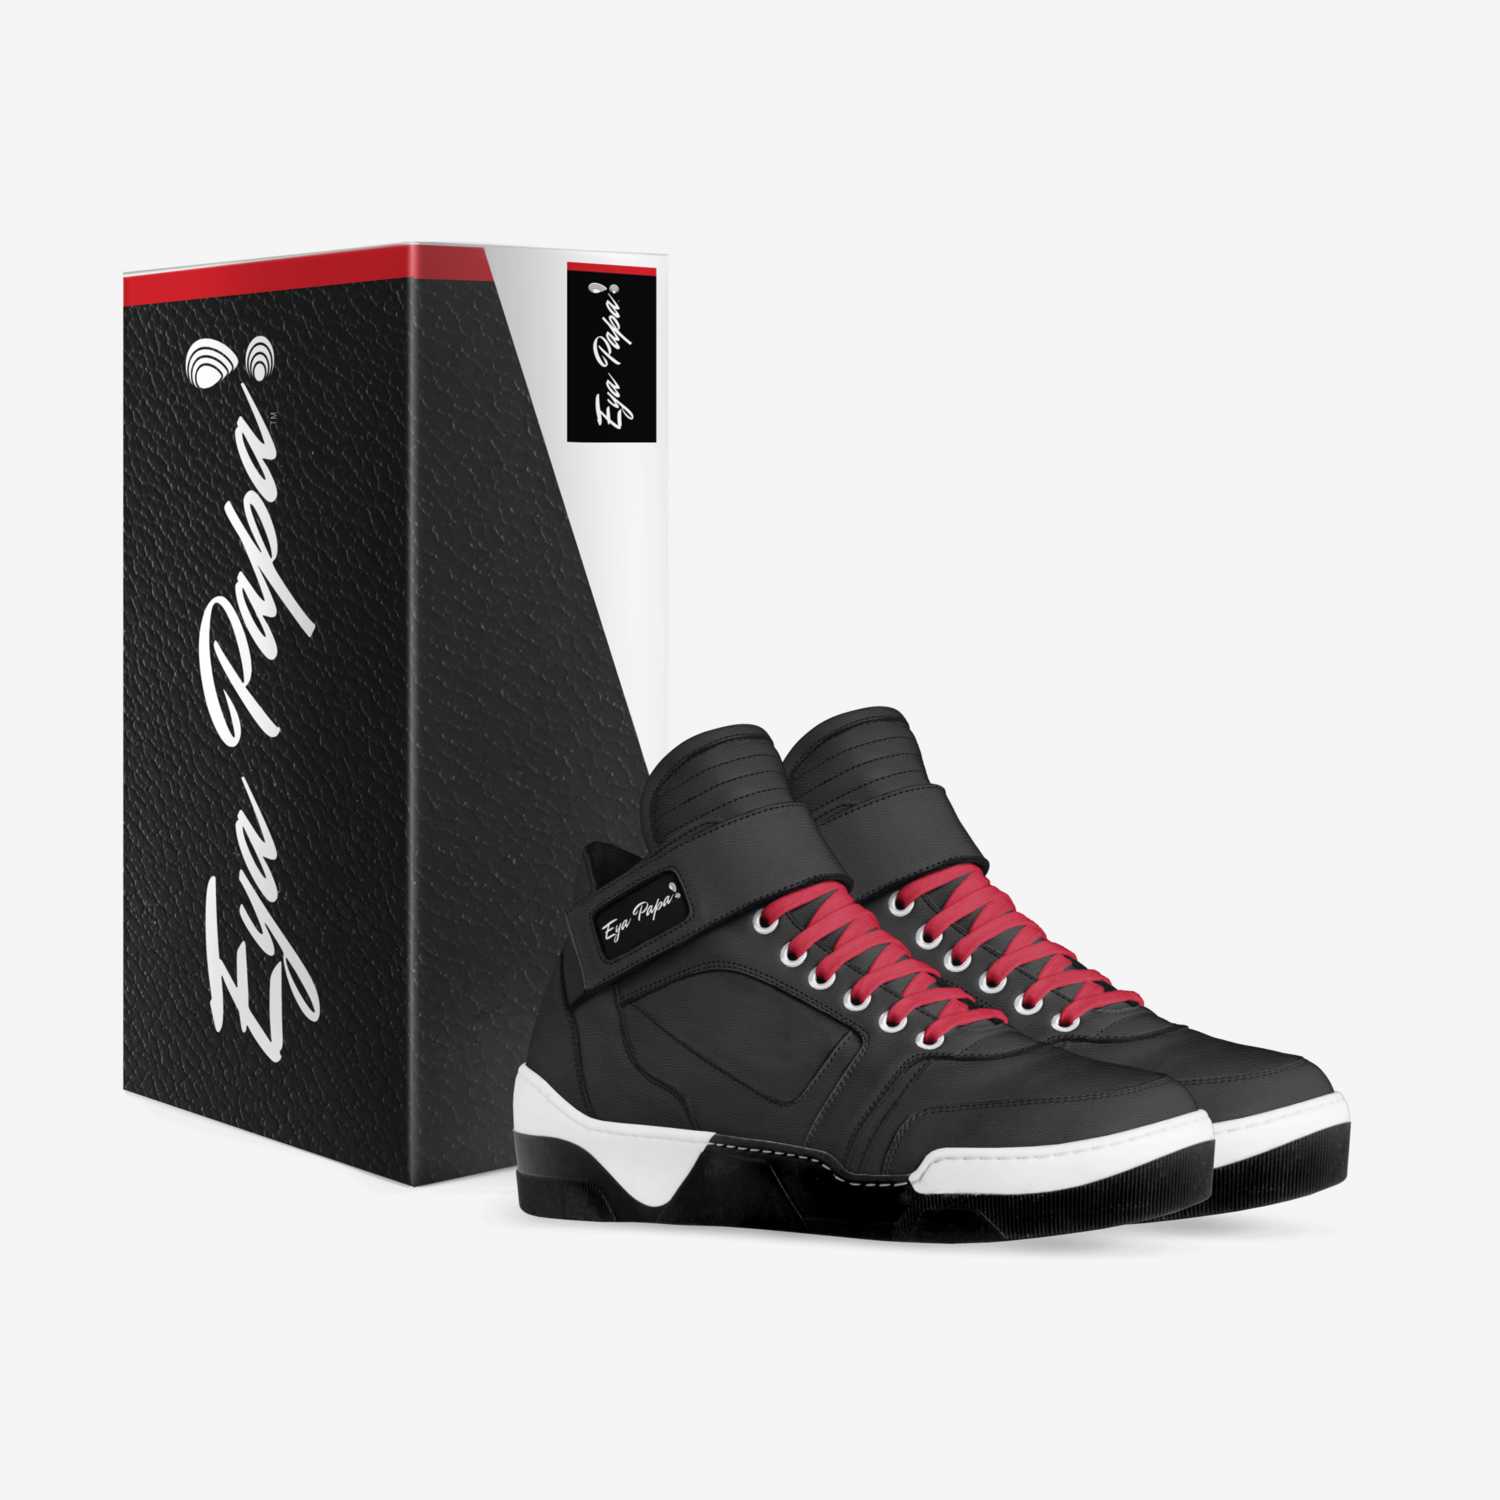 EYA PAPA custom made in Italy shoes by Eya Papa | Box view